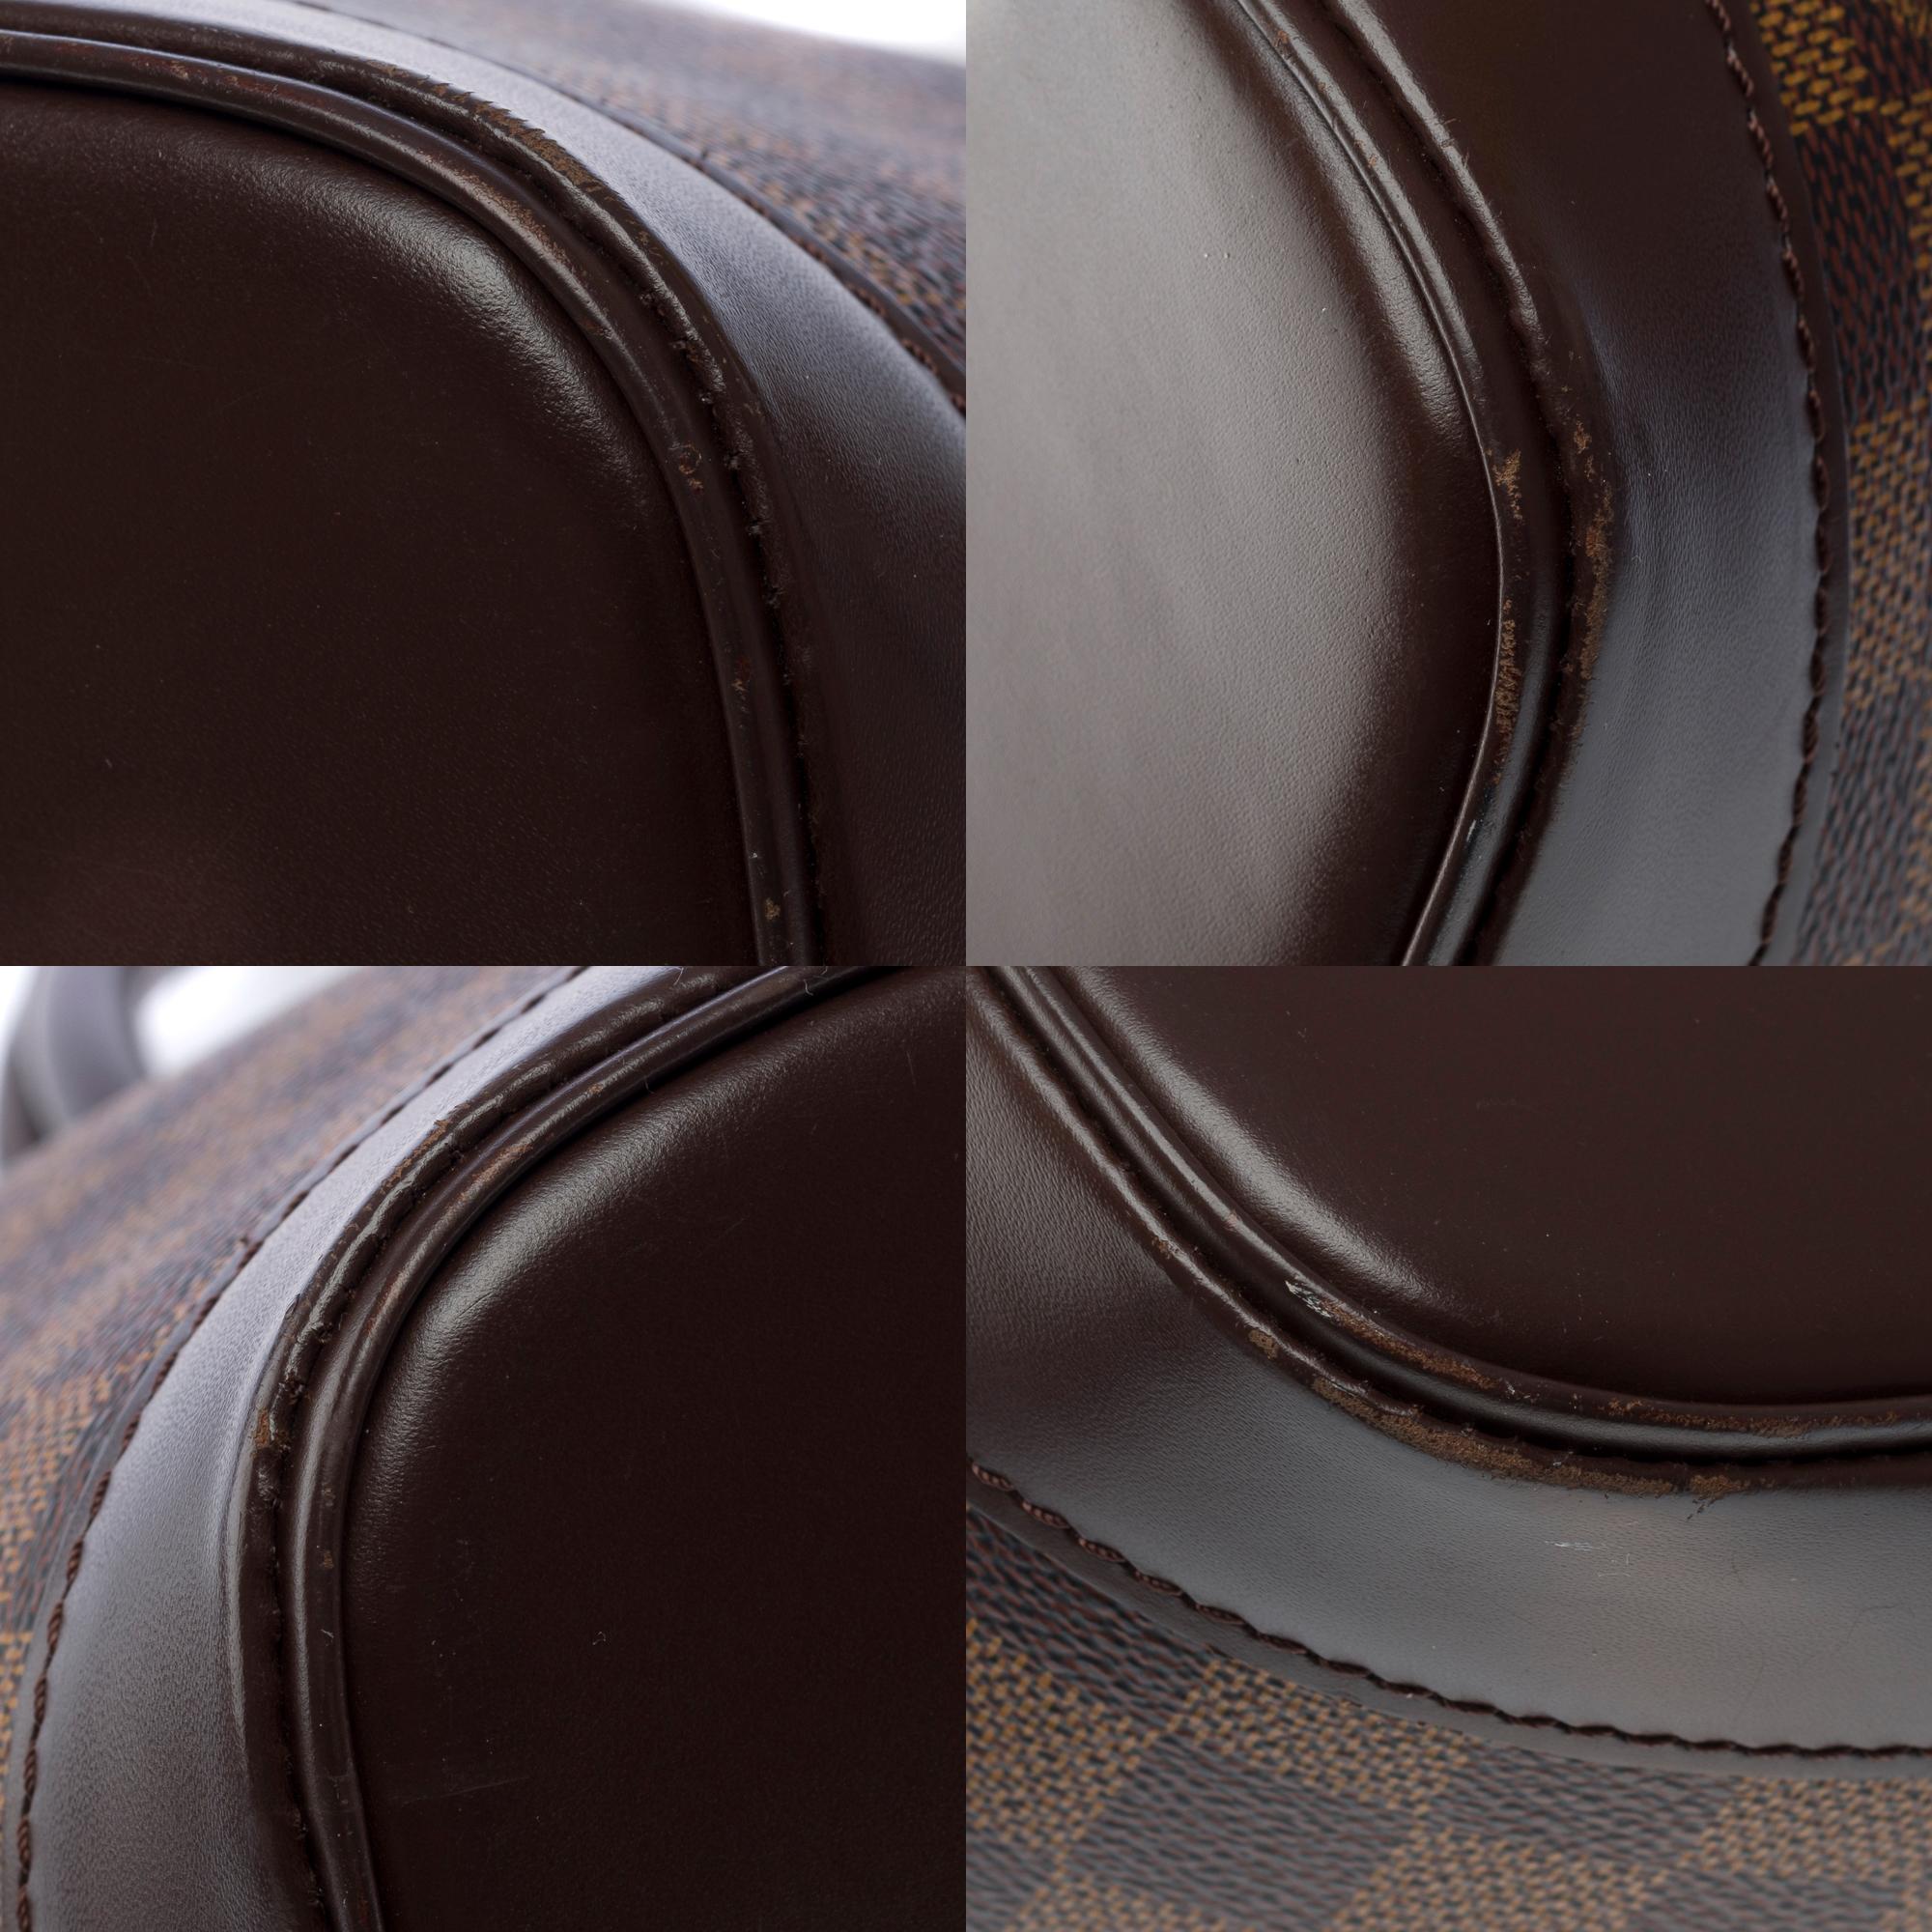 Lovely Louis Vuitton Alma handbag strap in brown damier canvas, GHW For Sale 7